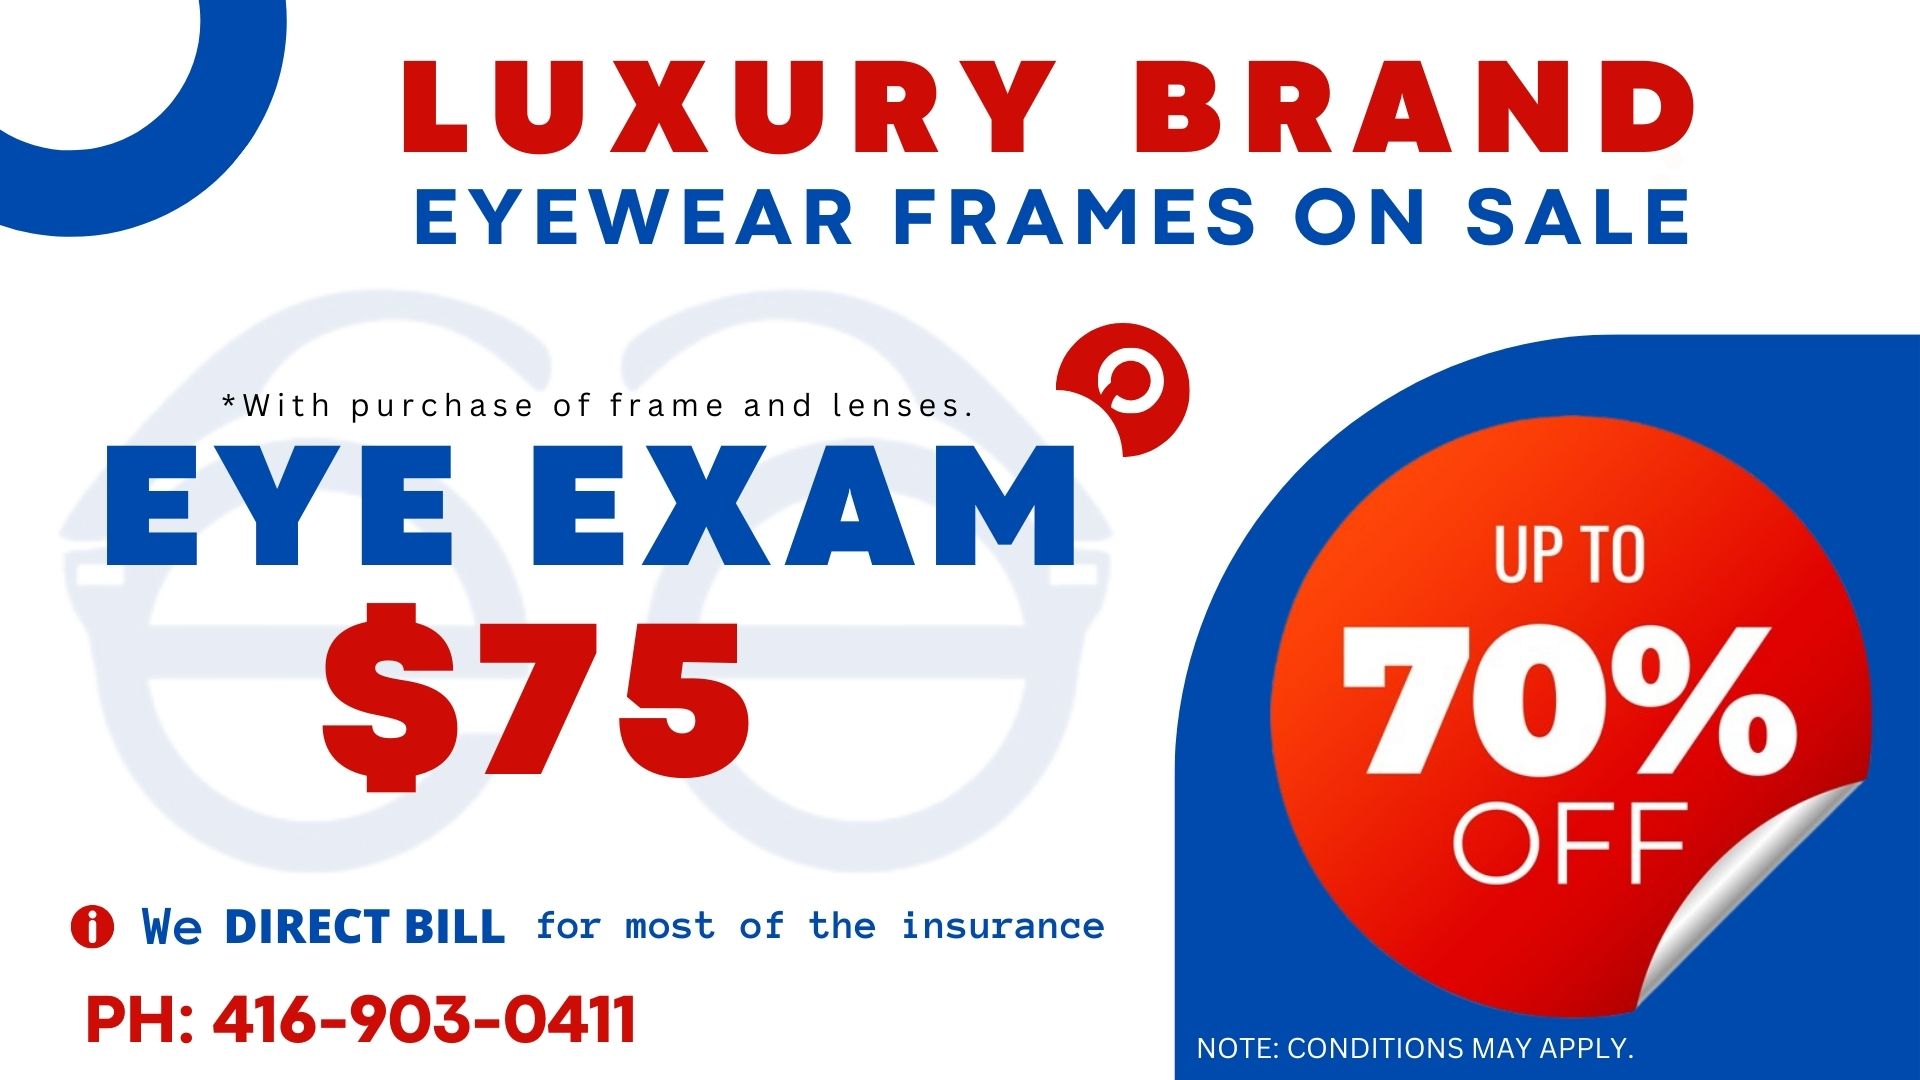 Luxury Brand Eyewear on sale!